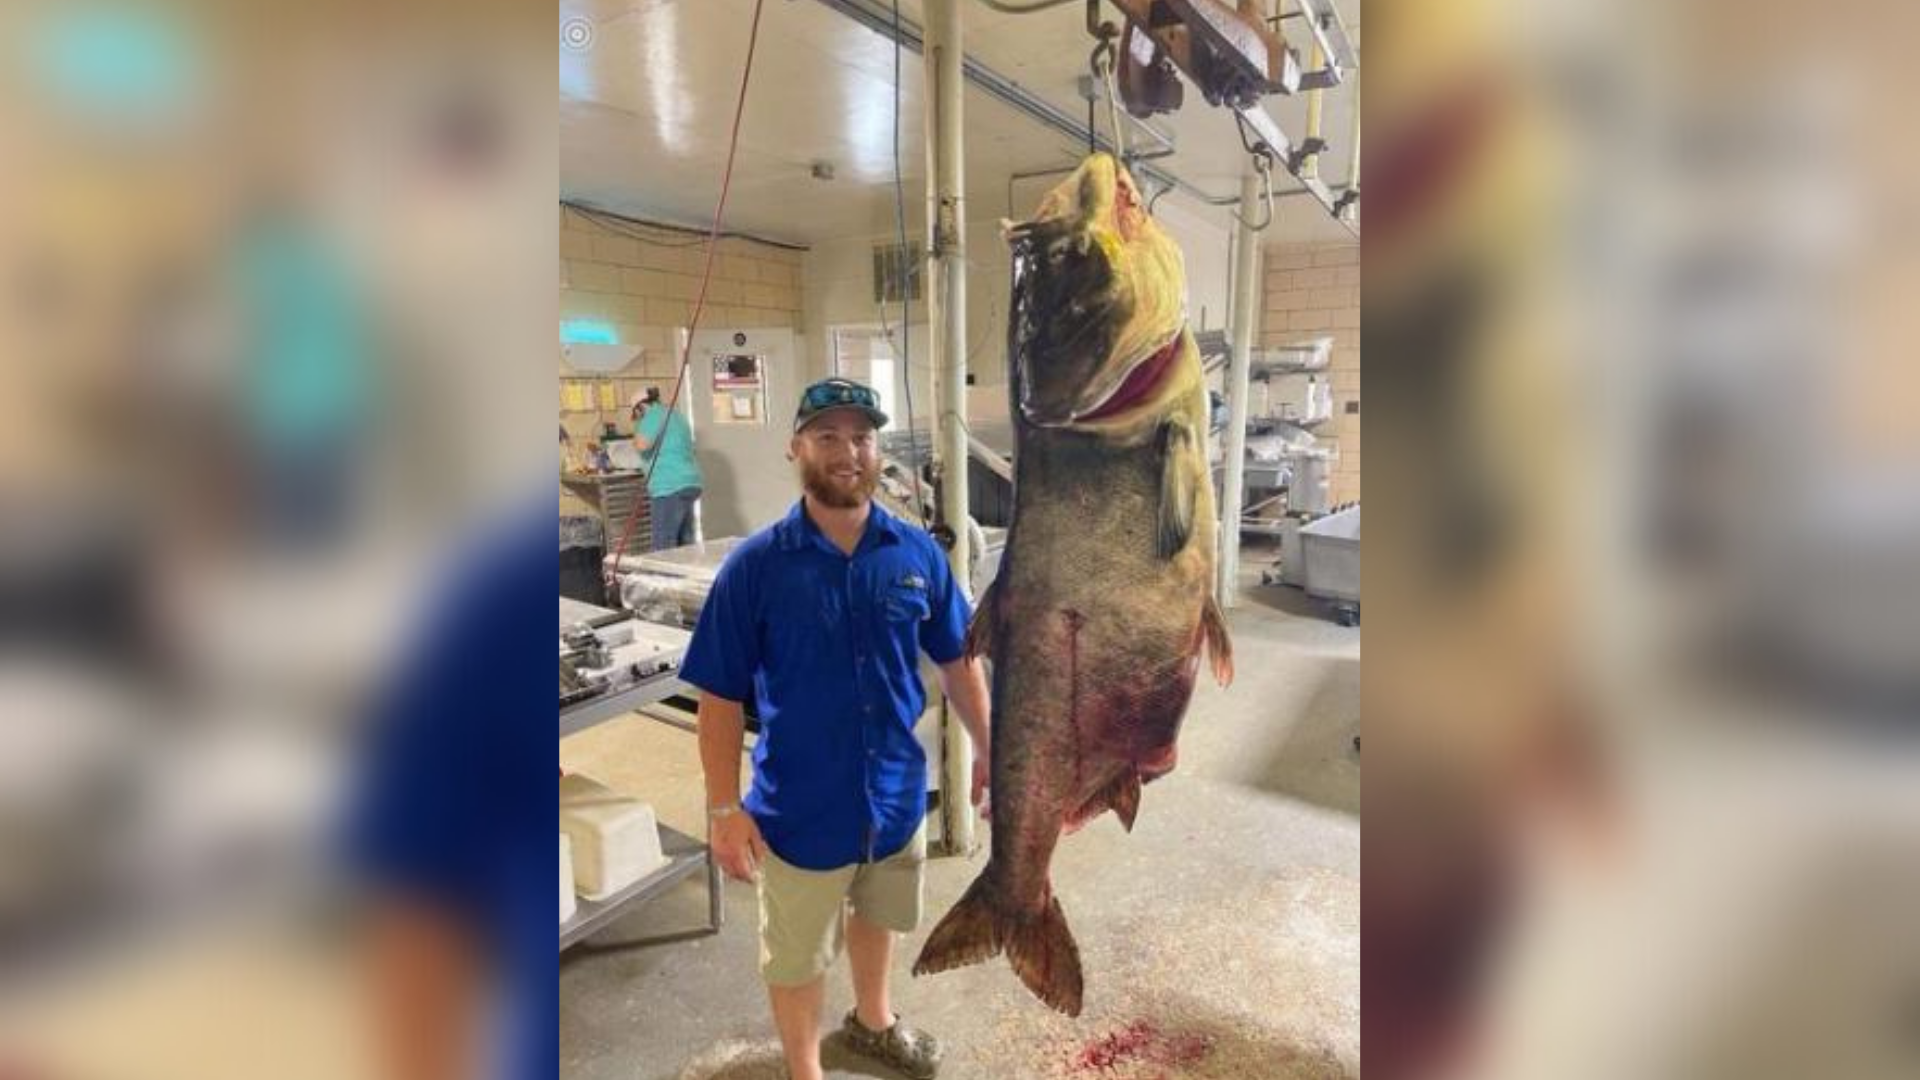 Missouri Bow Fisherman Sets New Record By Catching 125-Pound Fish